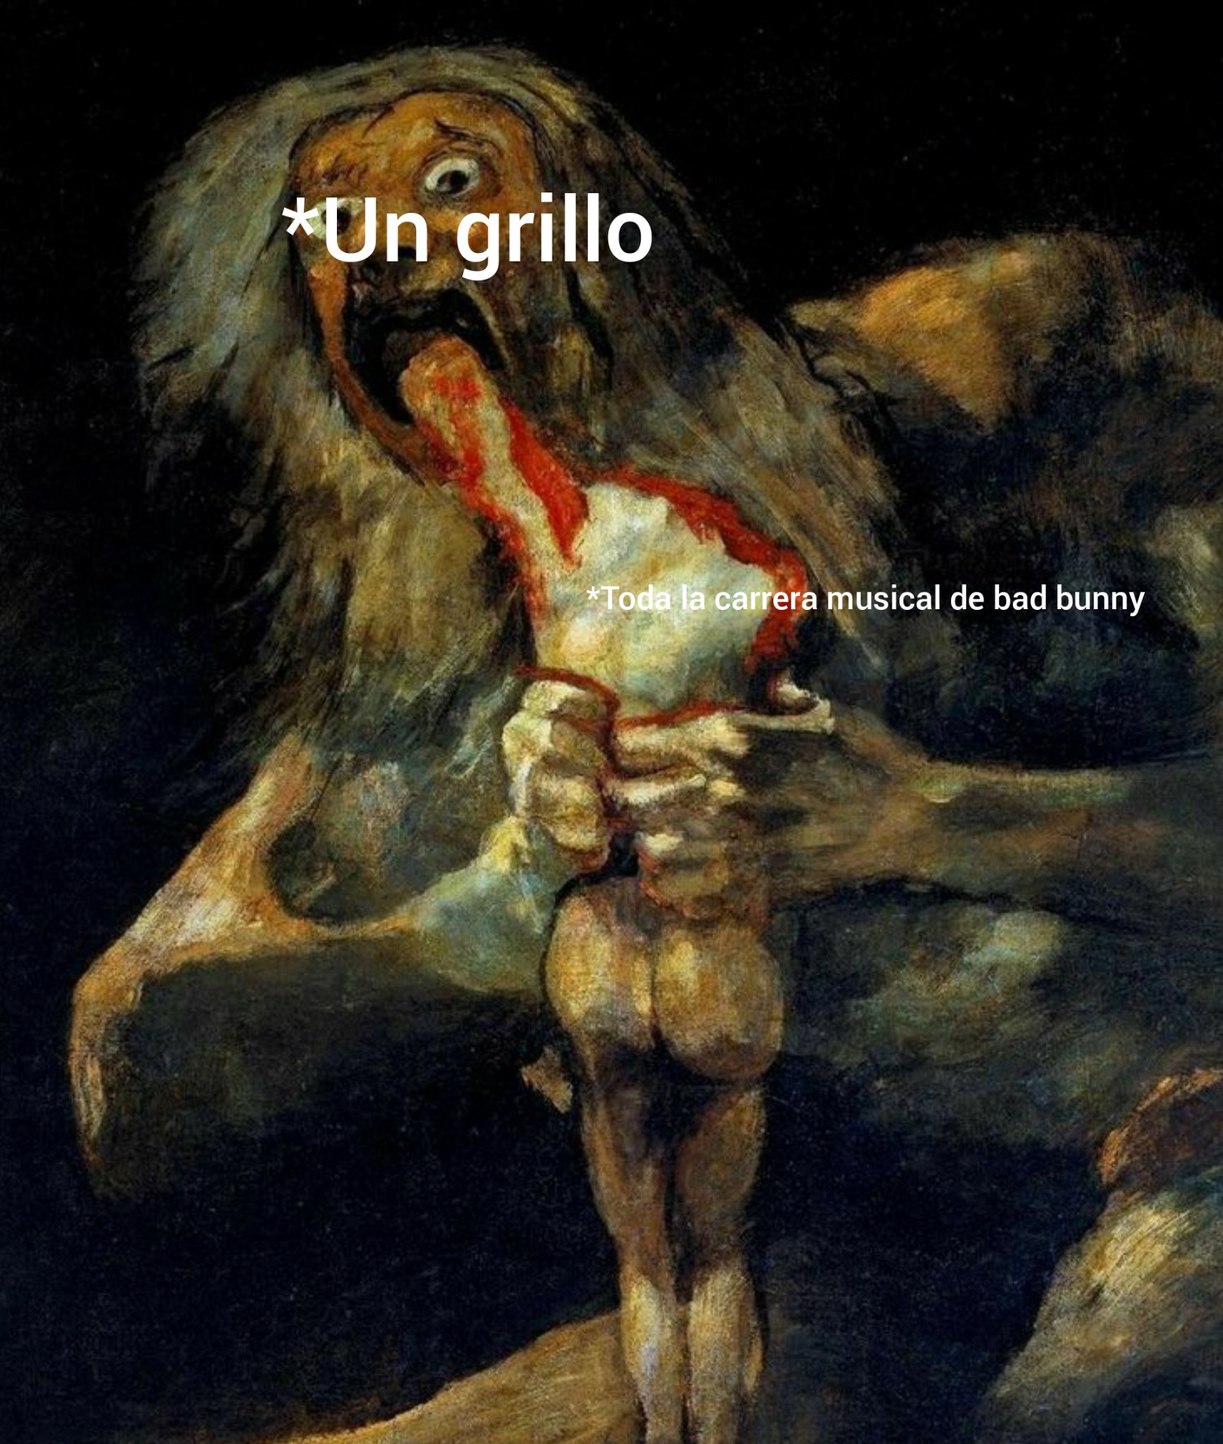 Don grillo - meme